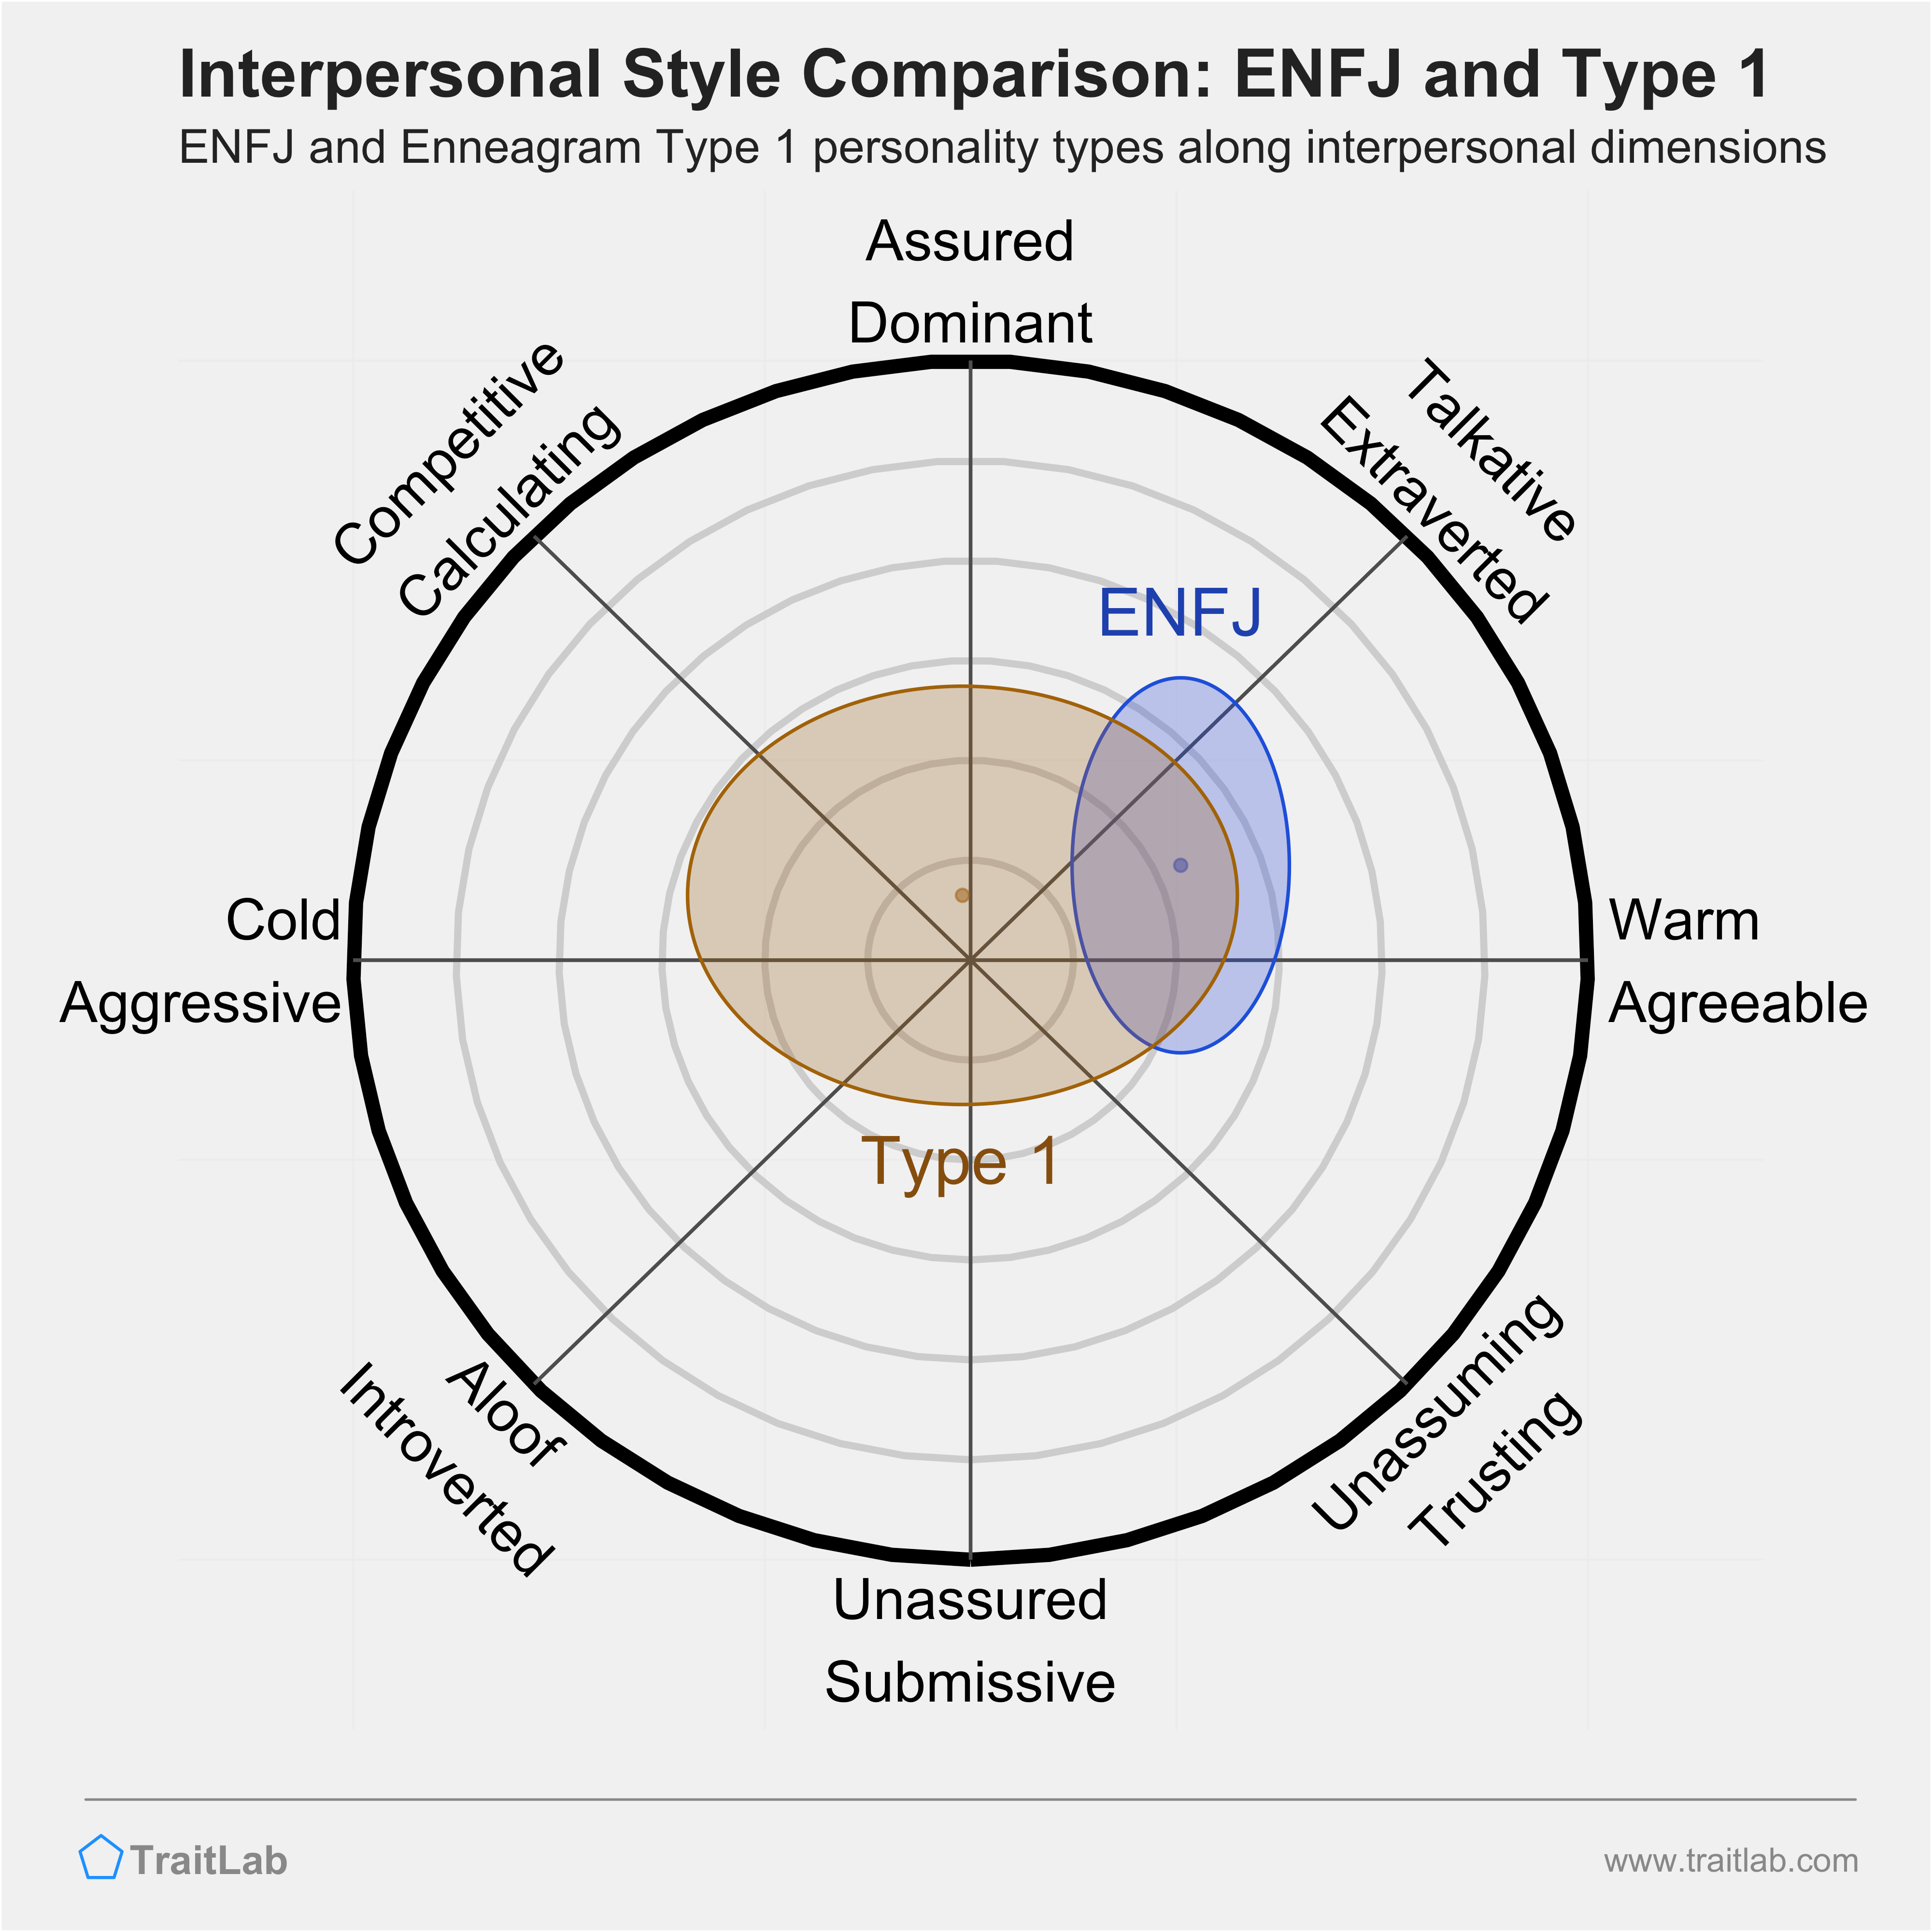 Enneagram ENFJ and Type 1 comparison across interpersonal dimensions